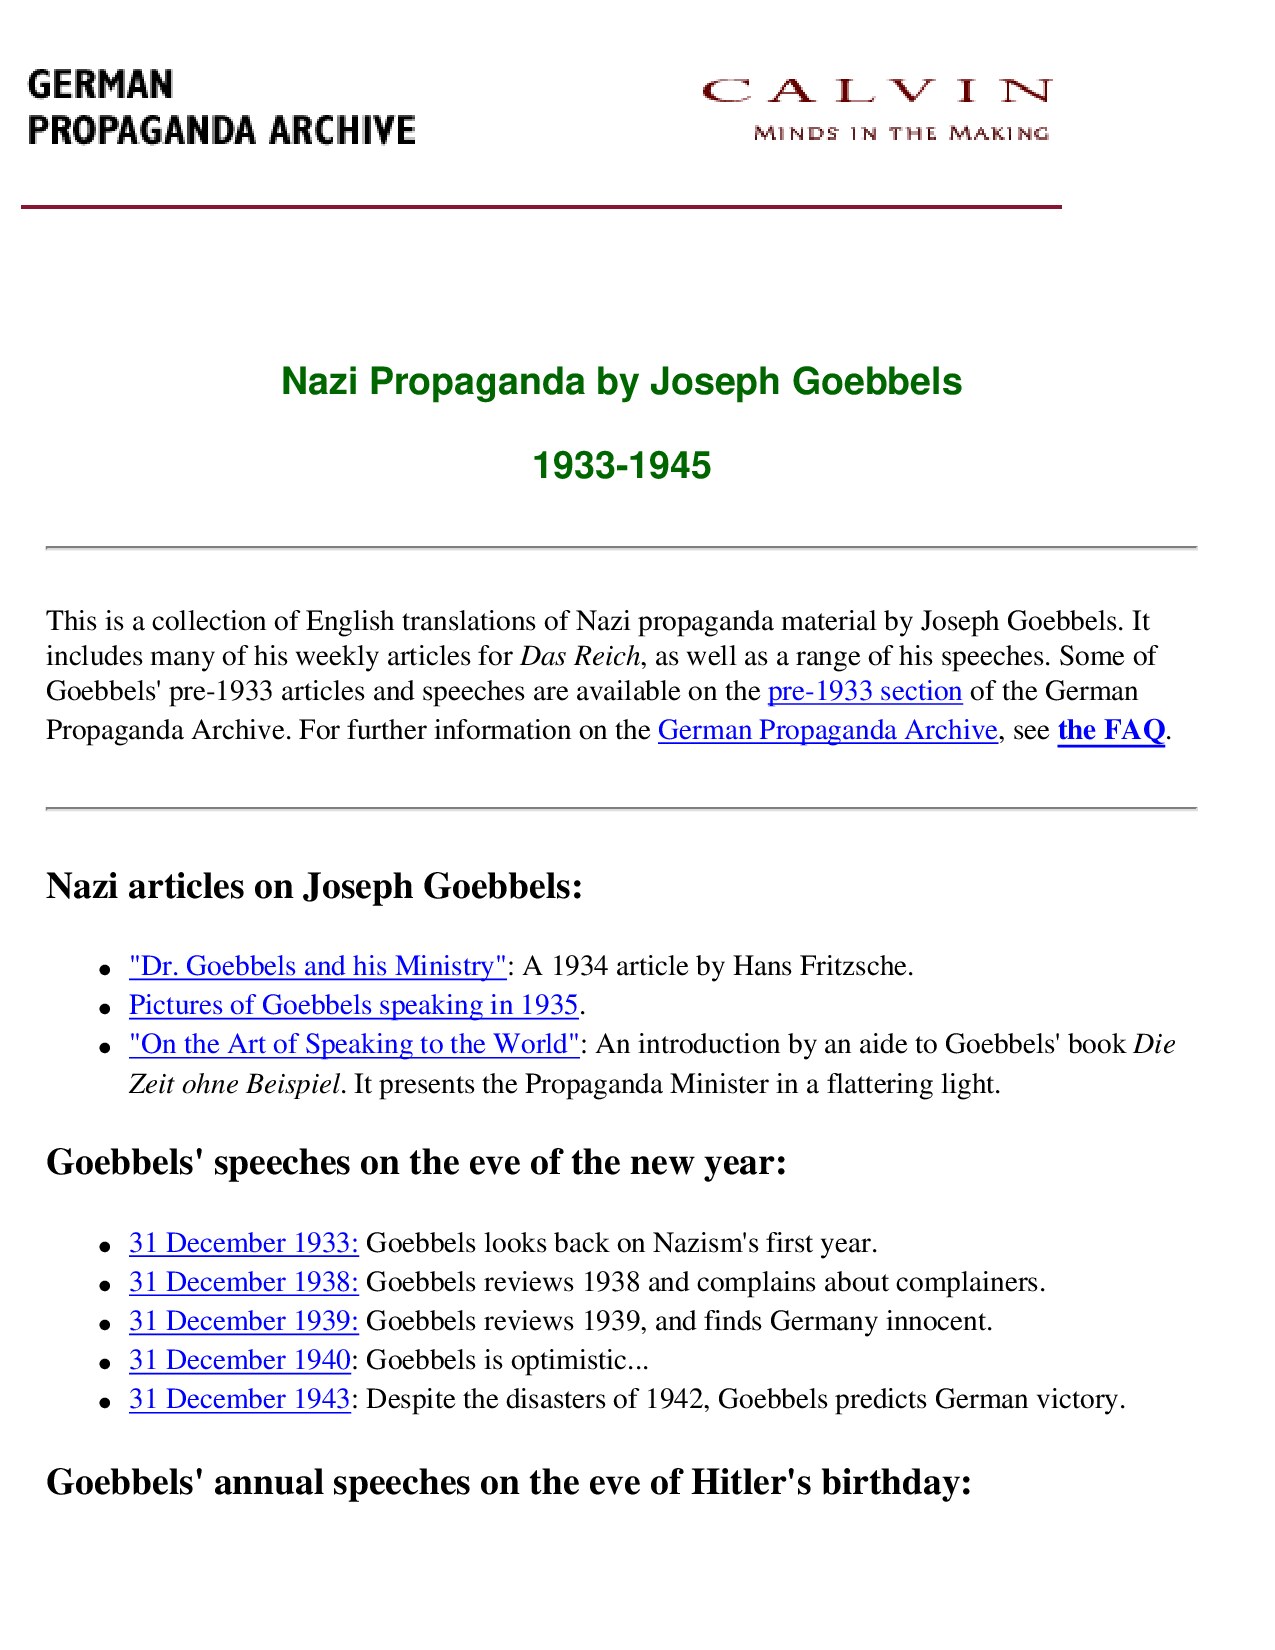 Nazi Propaganda (1933-1945) - Joseph Goebbels 